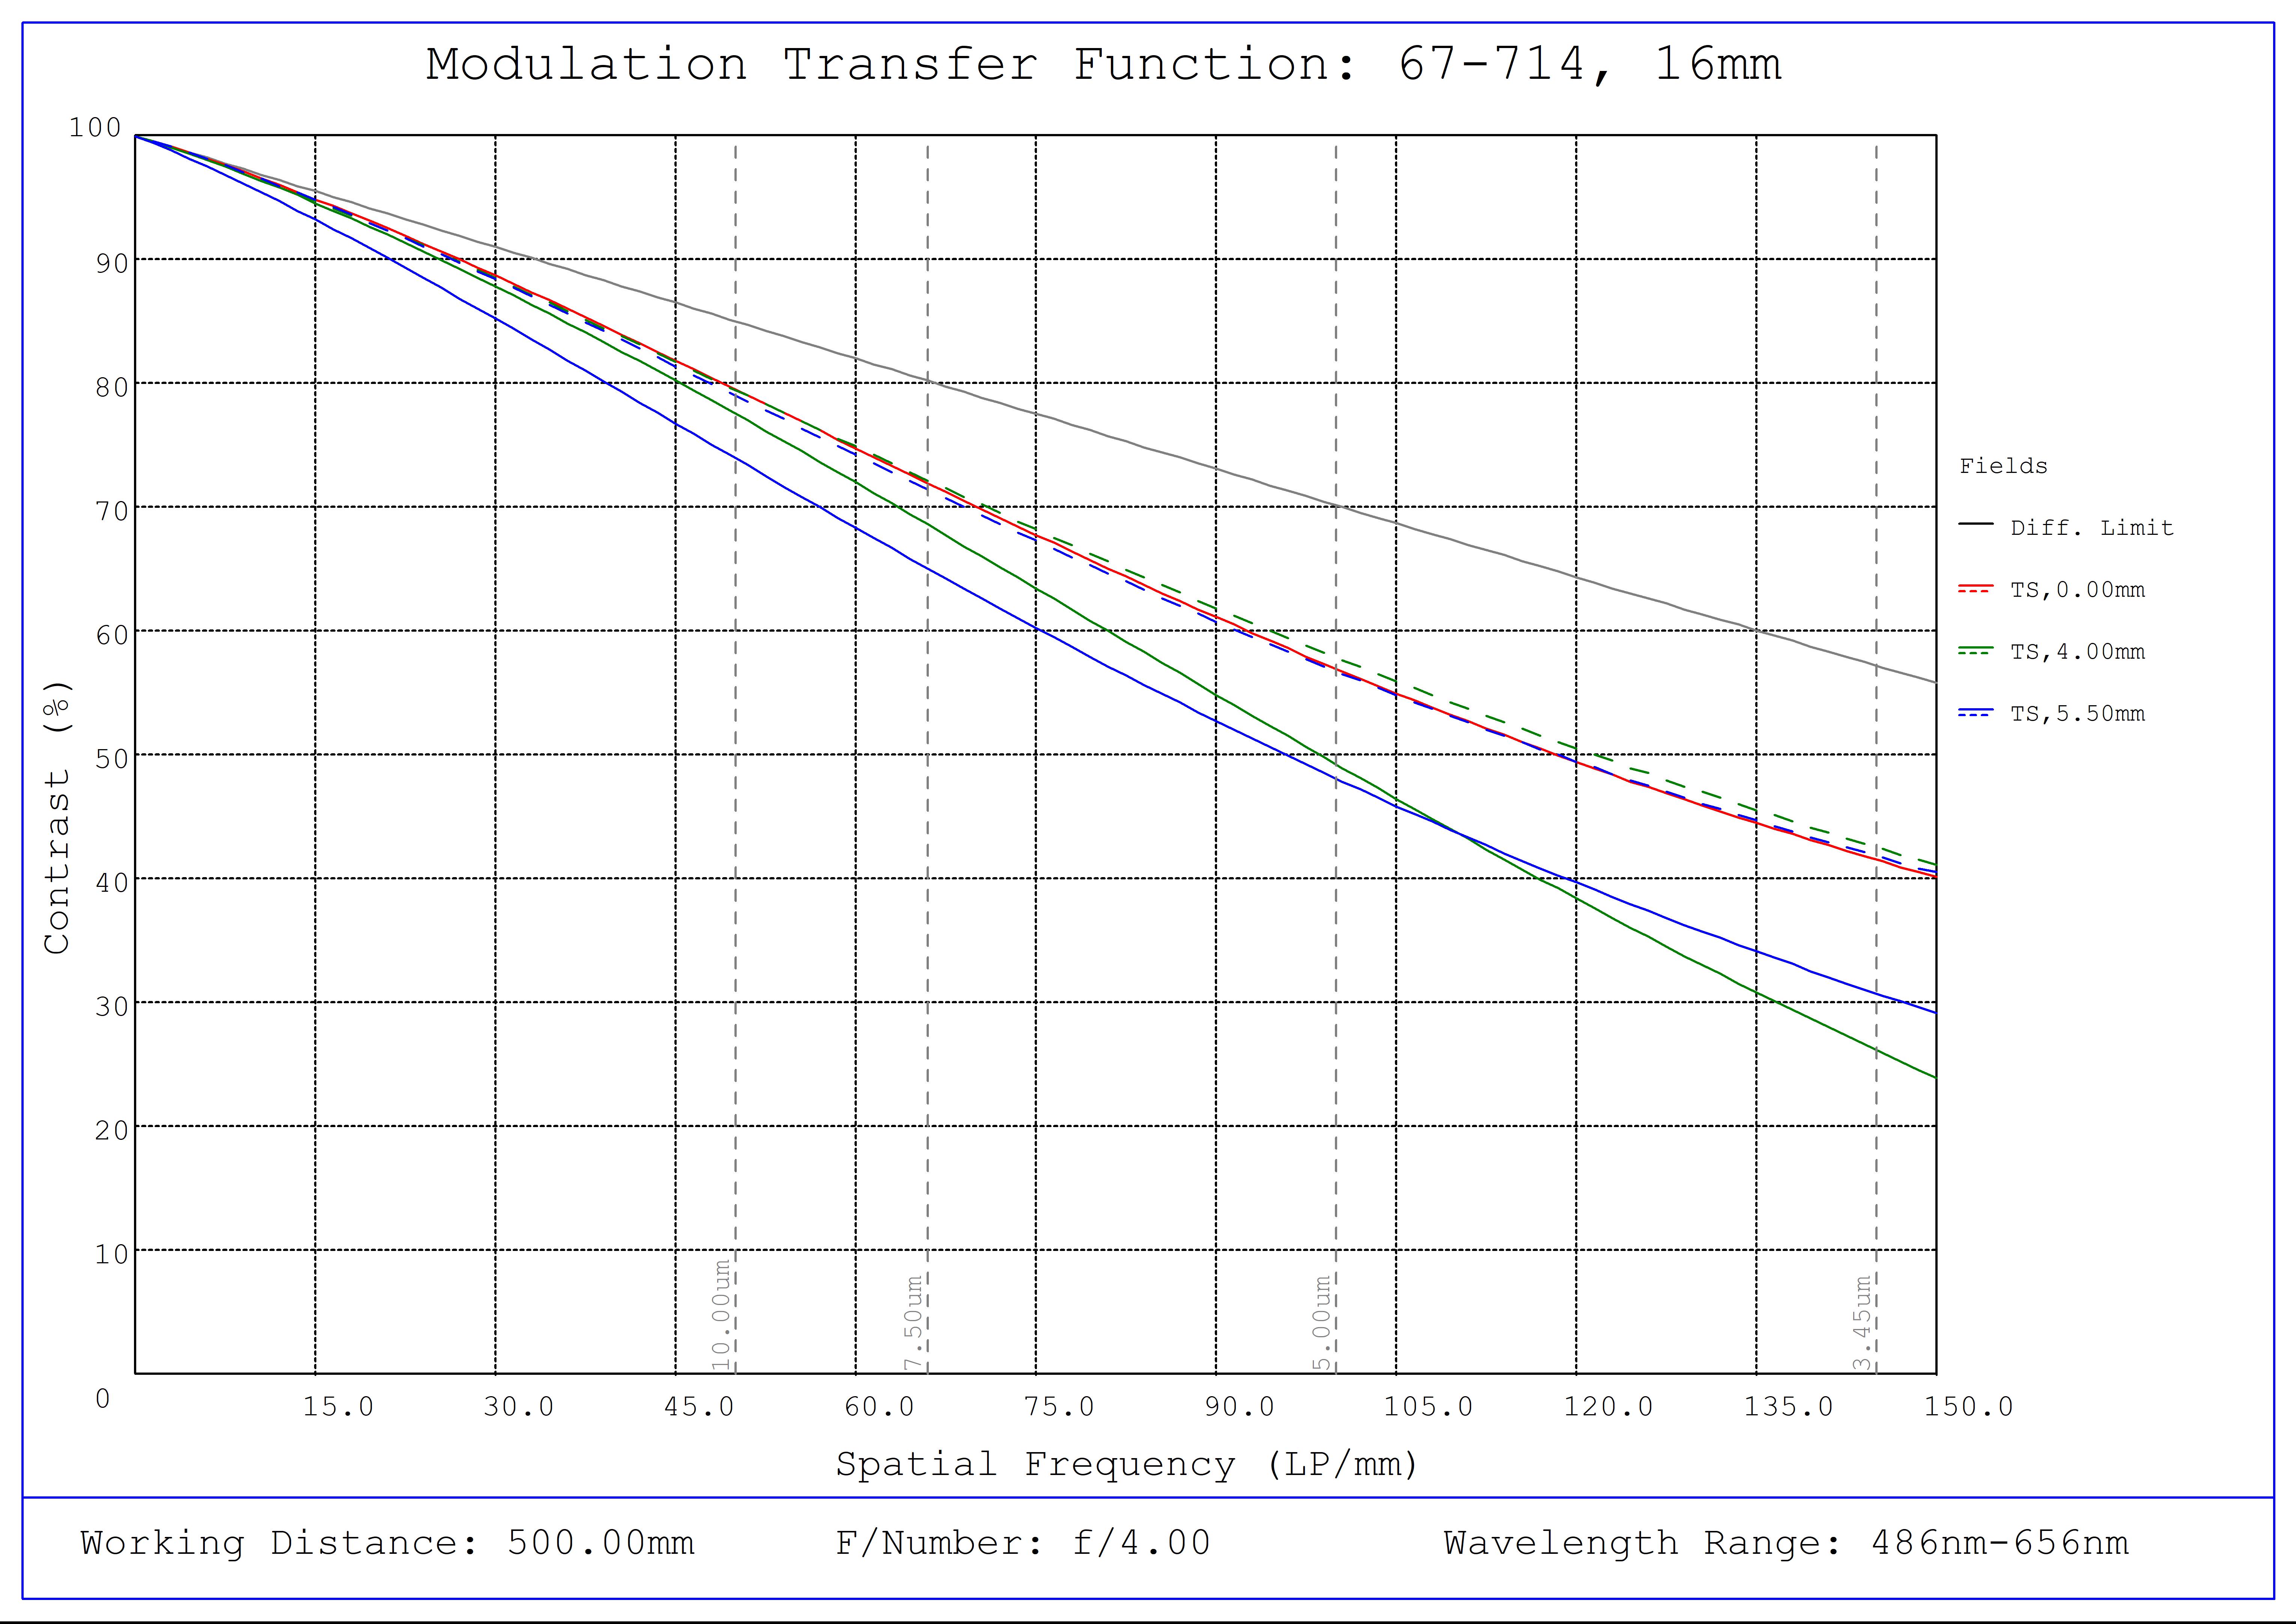 #67-714, 16mm C VIS-NIR Series Fixed Focal Length Lens, Modulated Transfer Function (MTF) Plot, 500mm Working Distance, f4